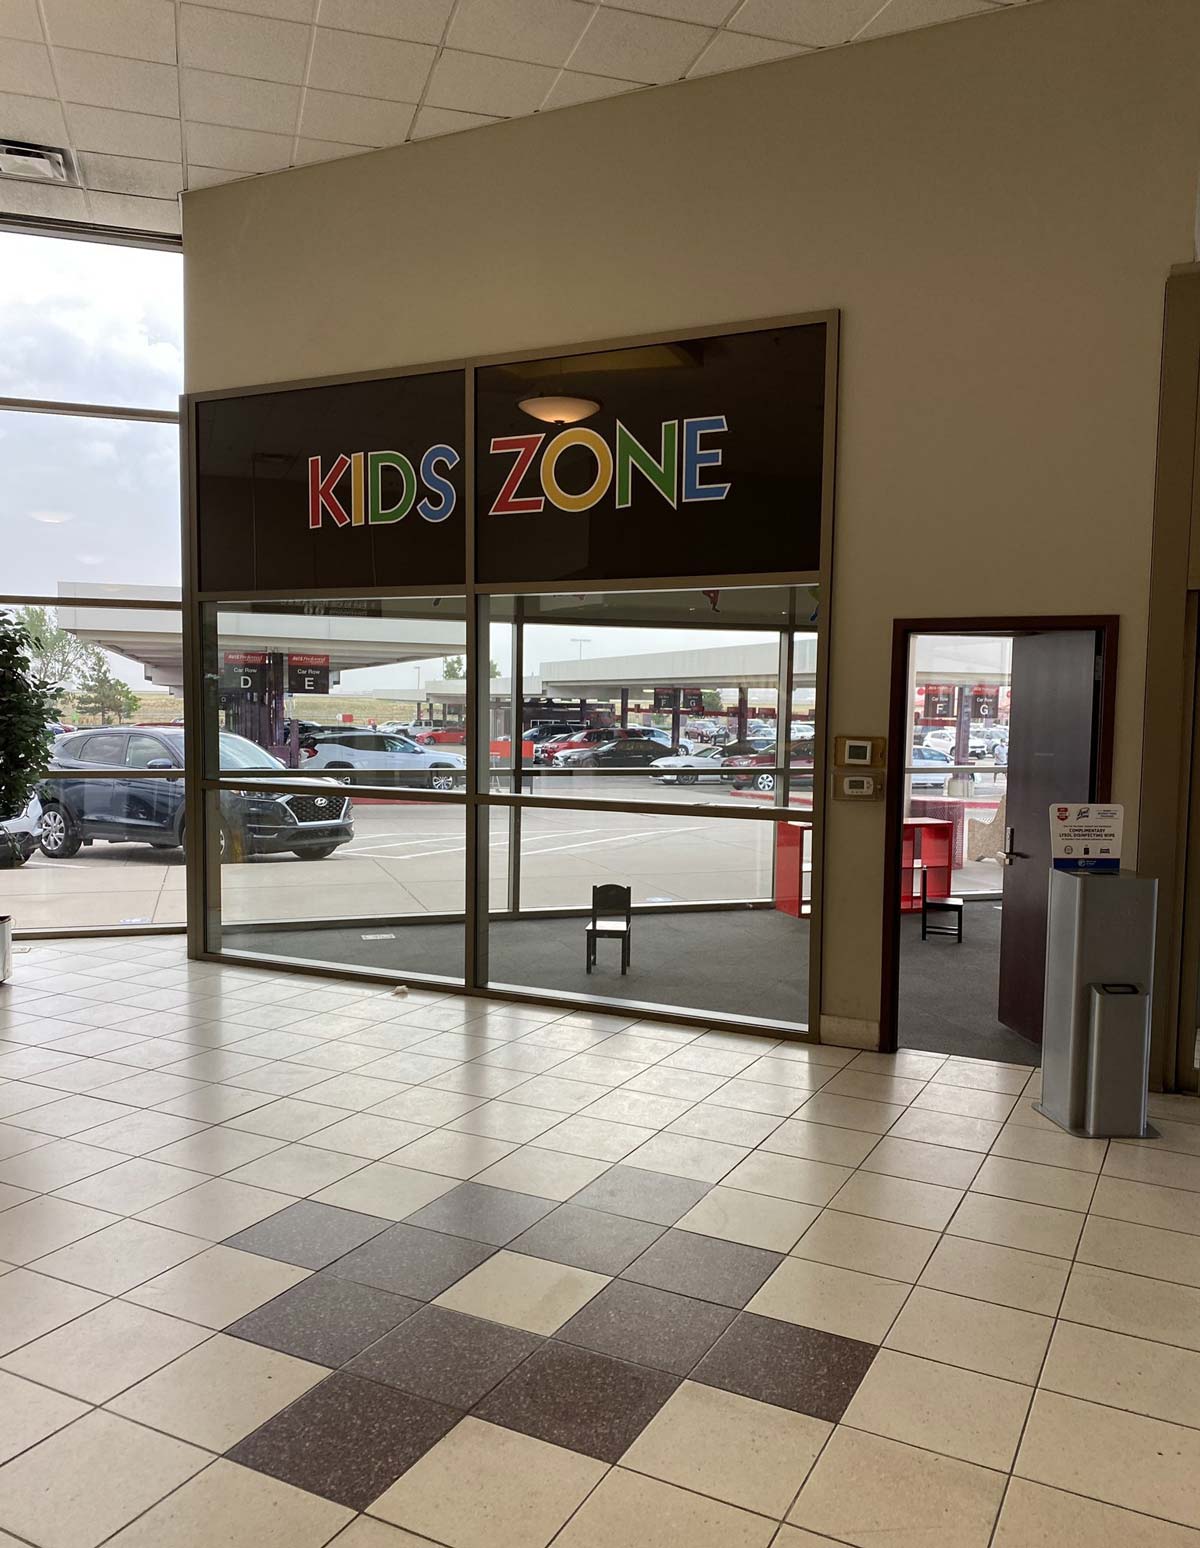 The Kid’s Zone looks like a blast!